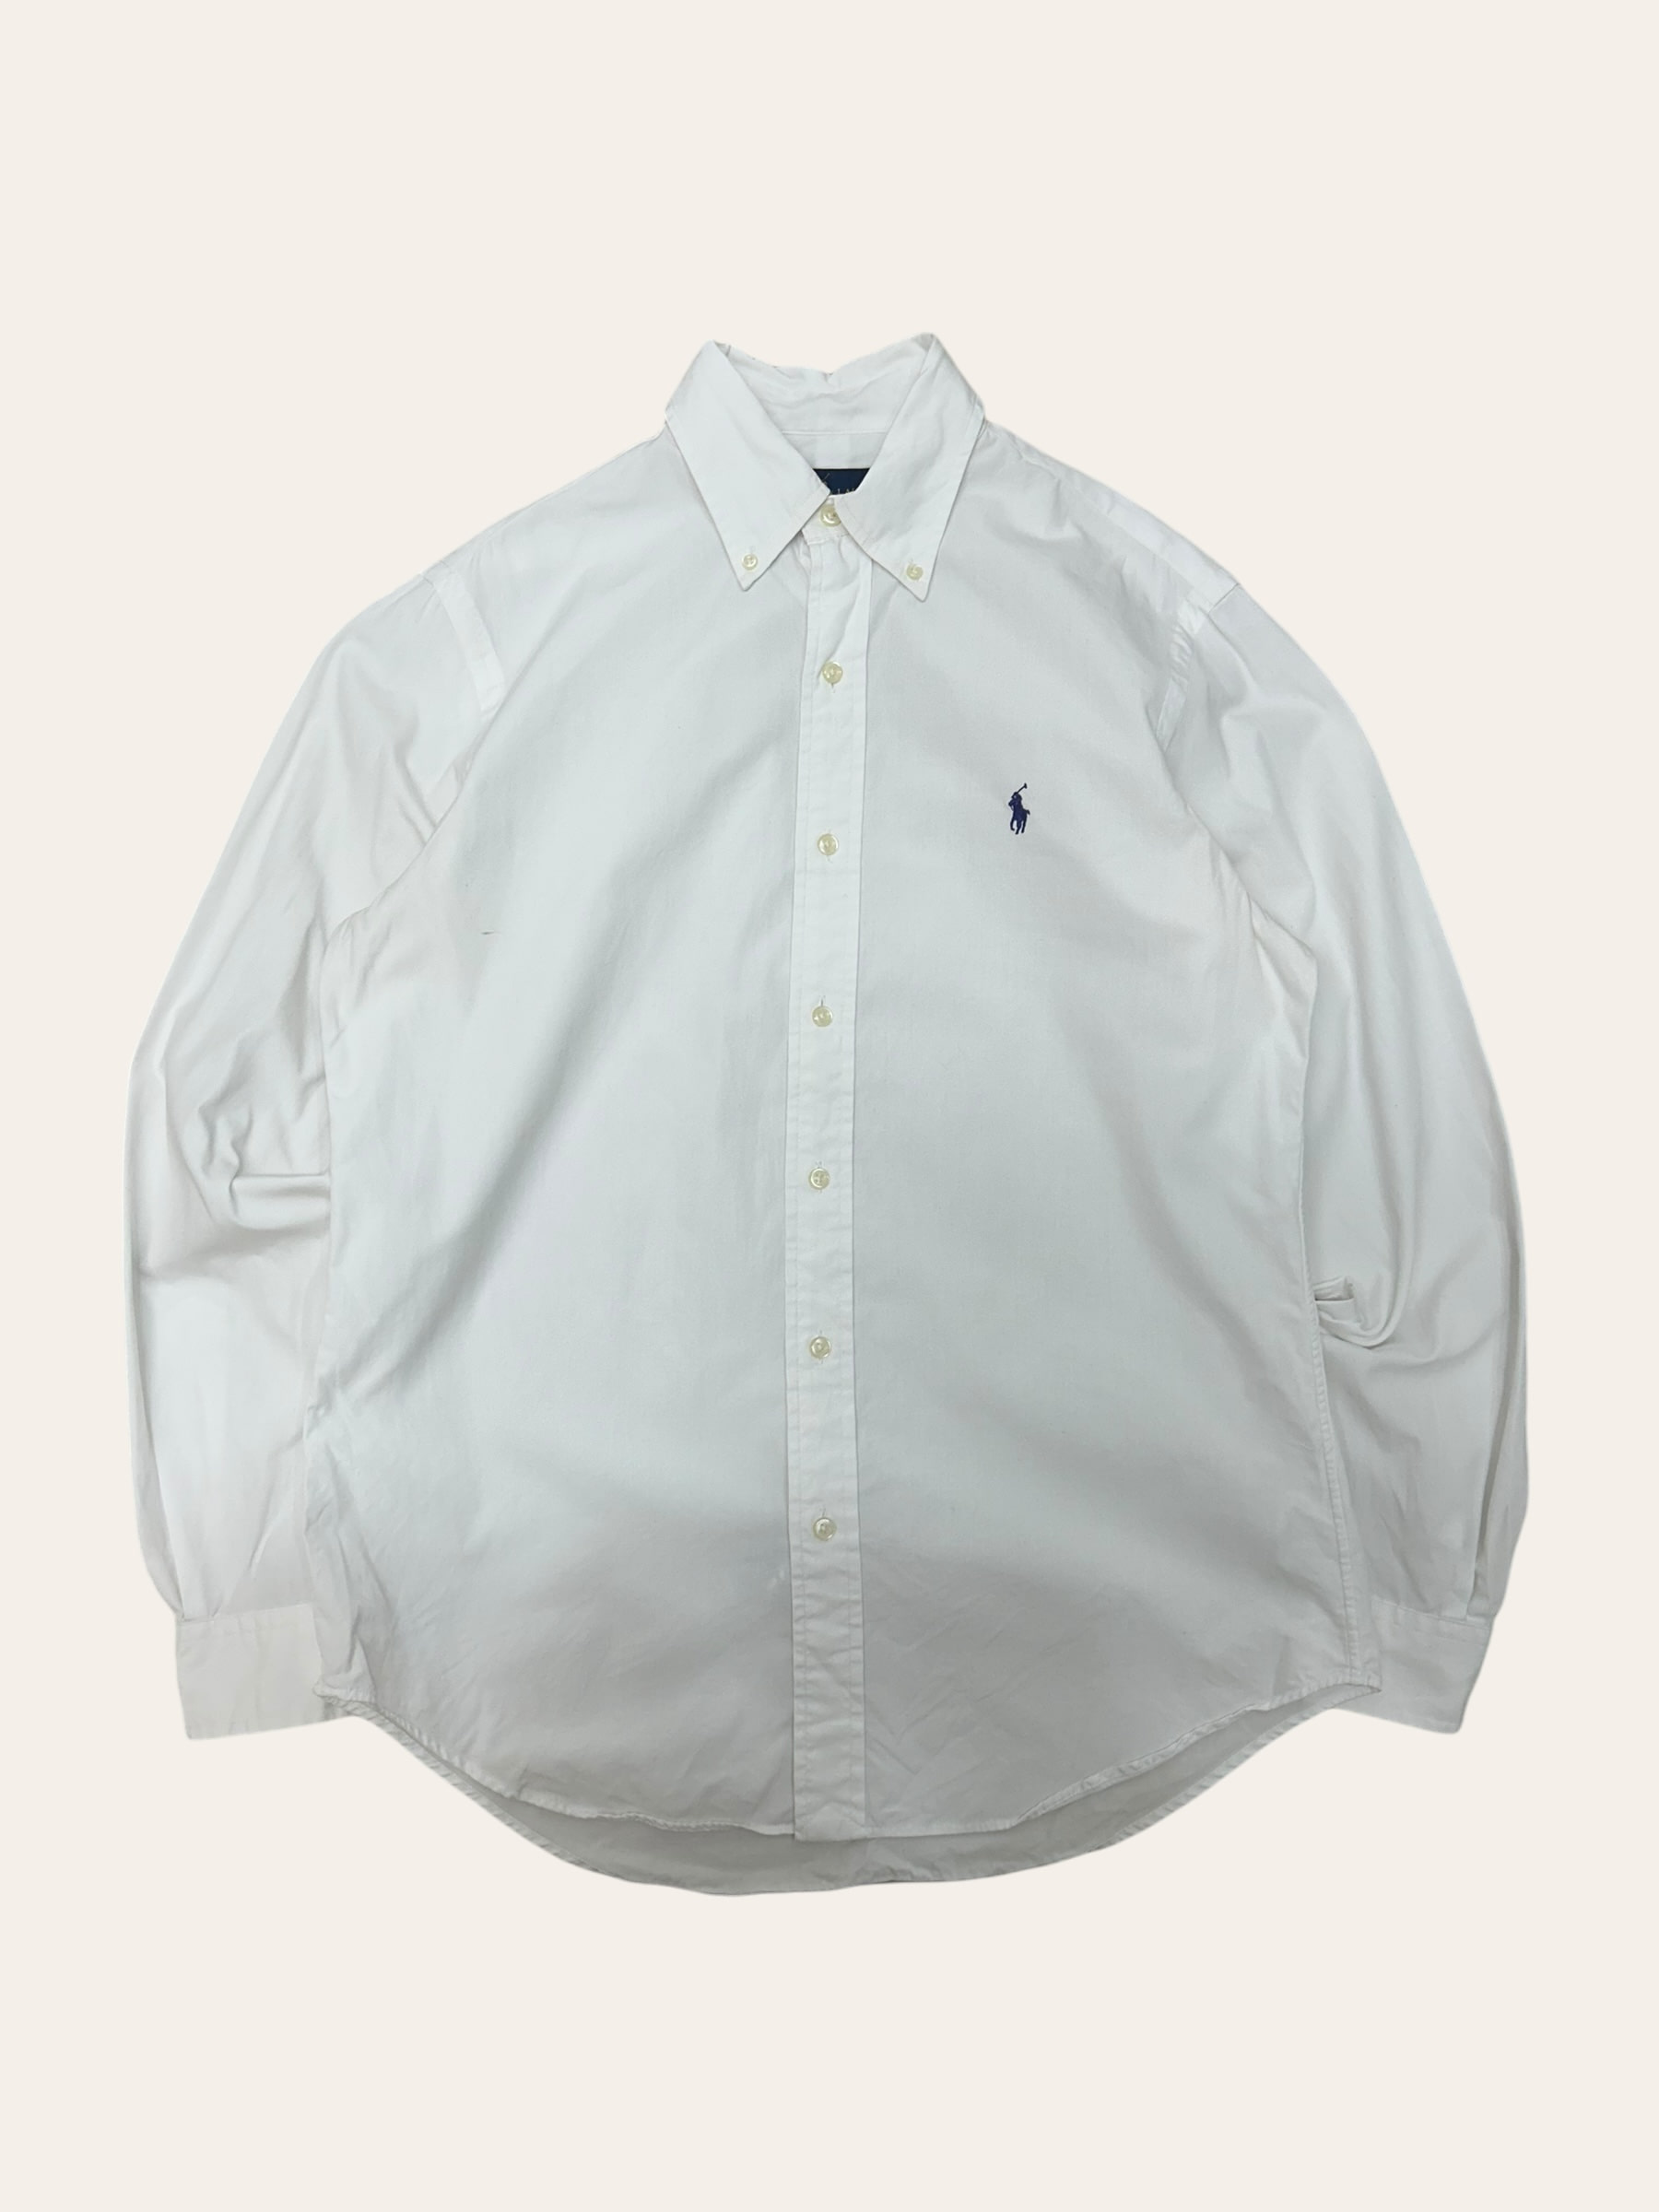 (From USA)Polo ralph lauren white poplin shirt S